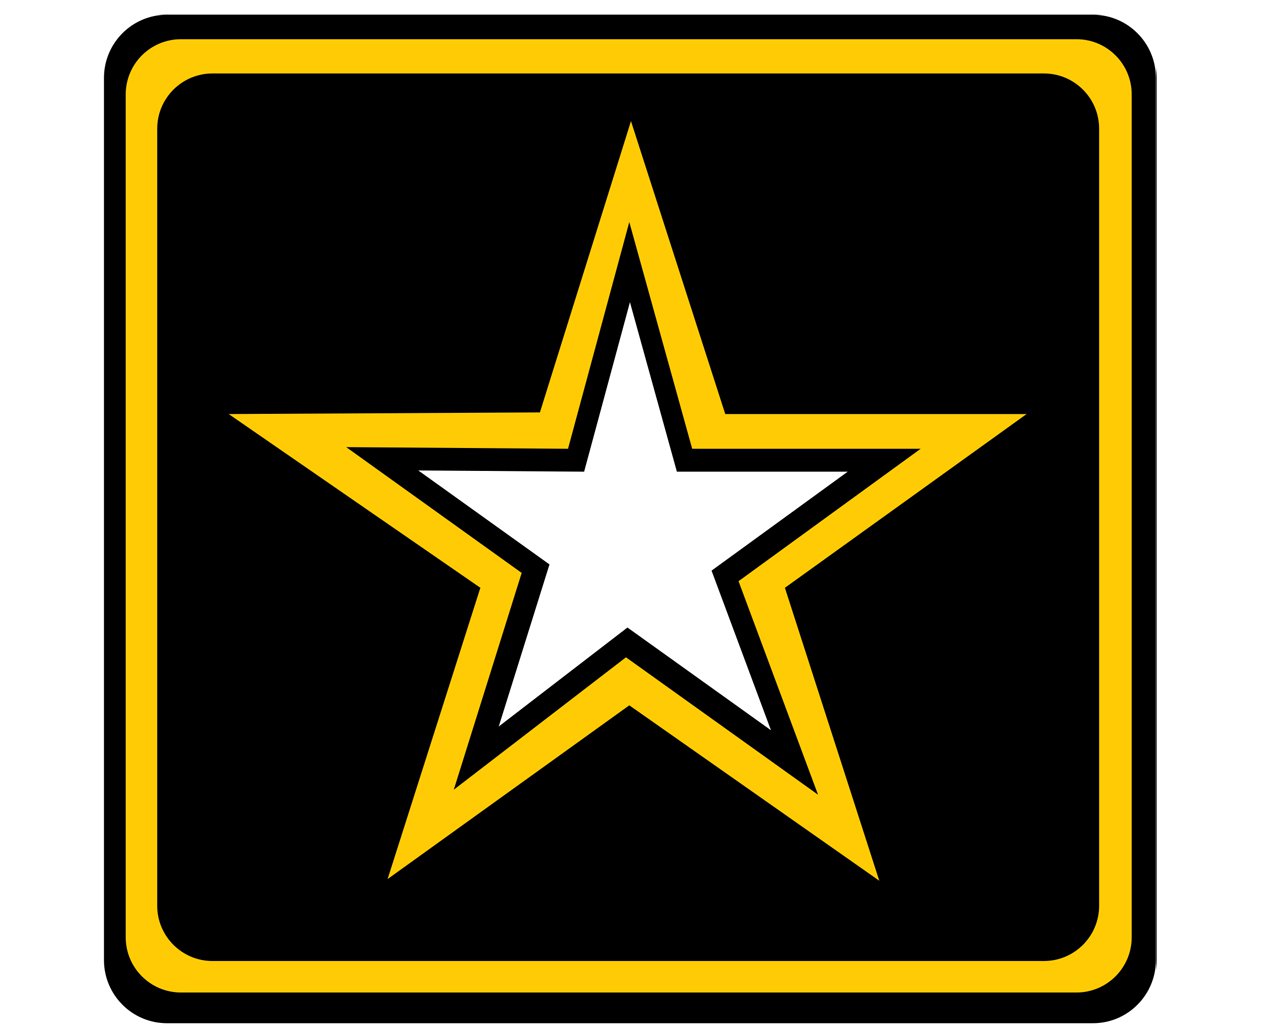 Trička s army znaky, symboly